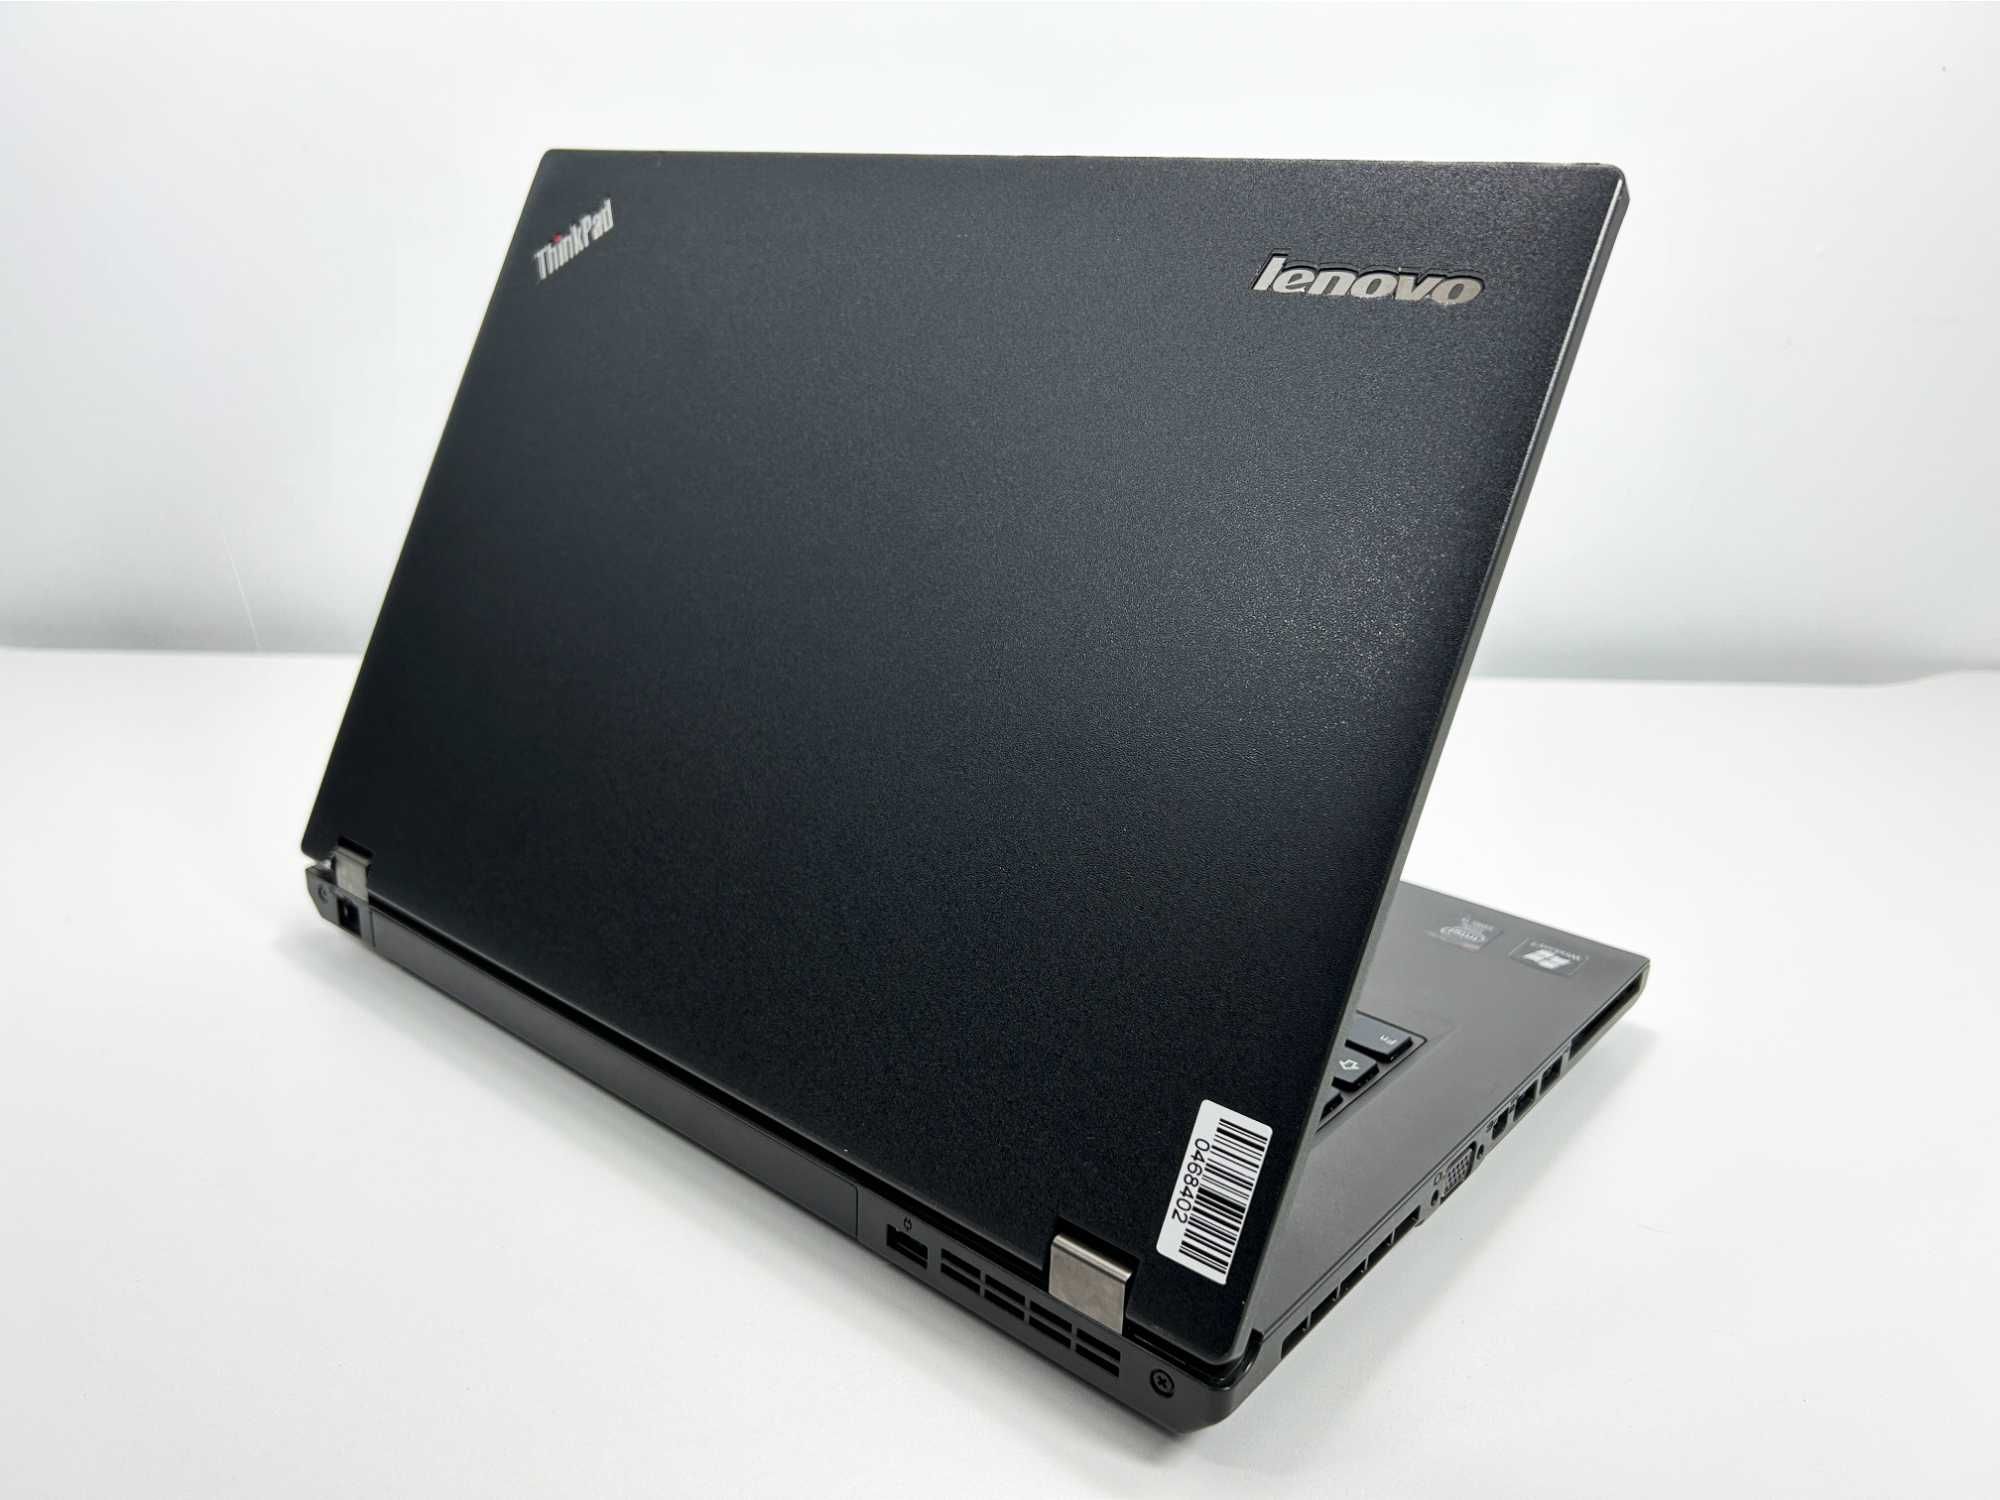 Laptop Lenovo i7 Thinkpad SLIM SSD Full HD Garantie